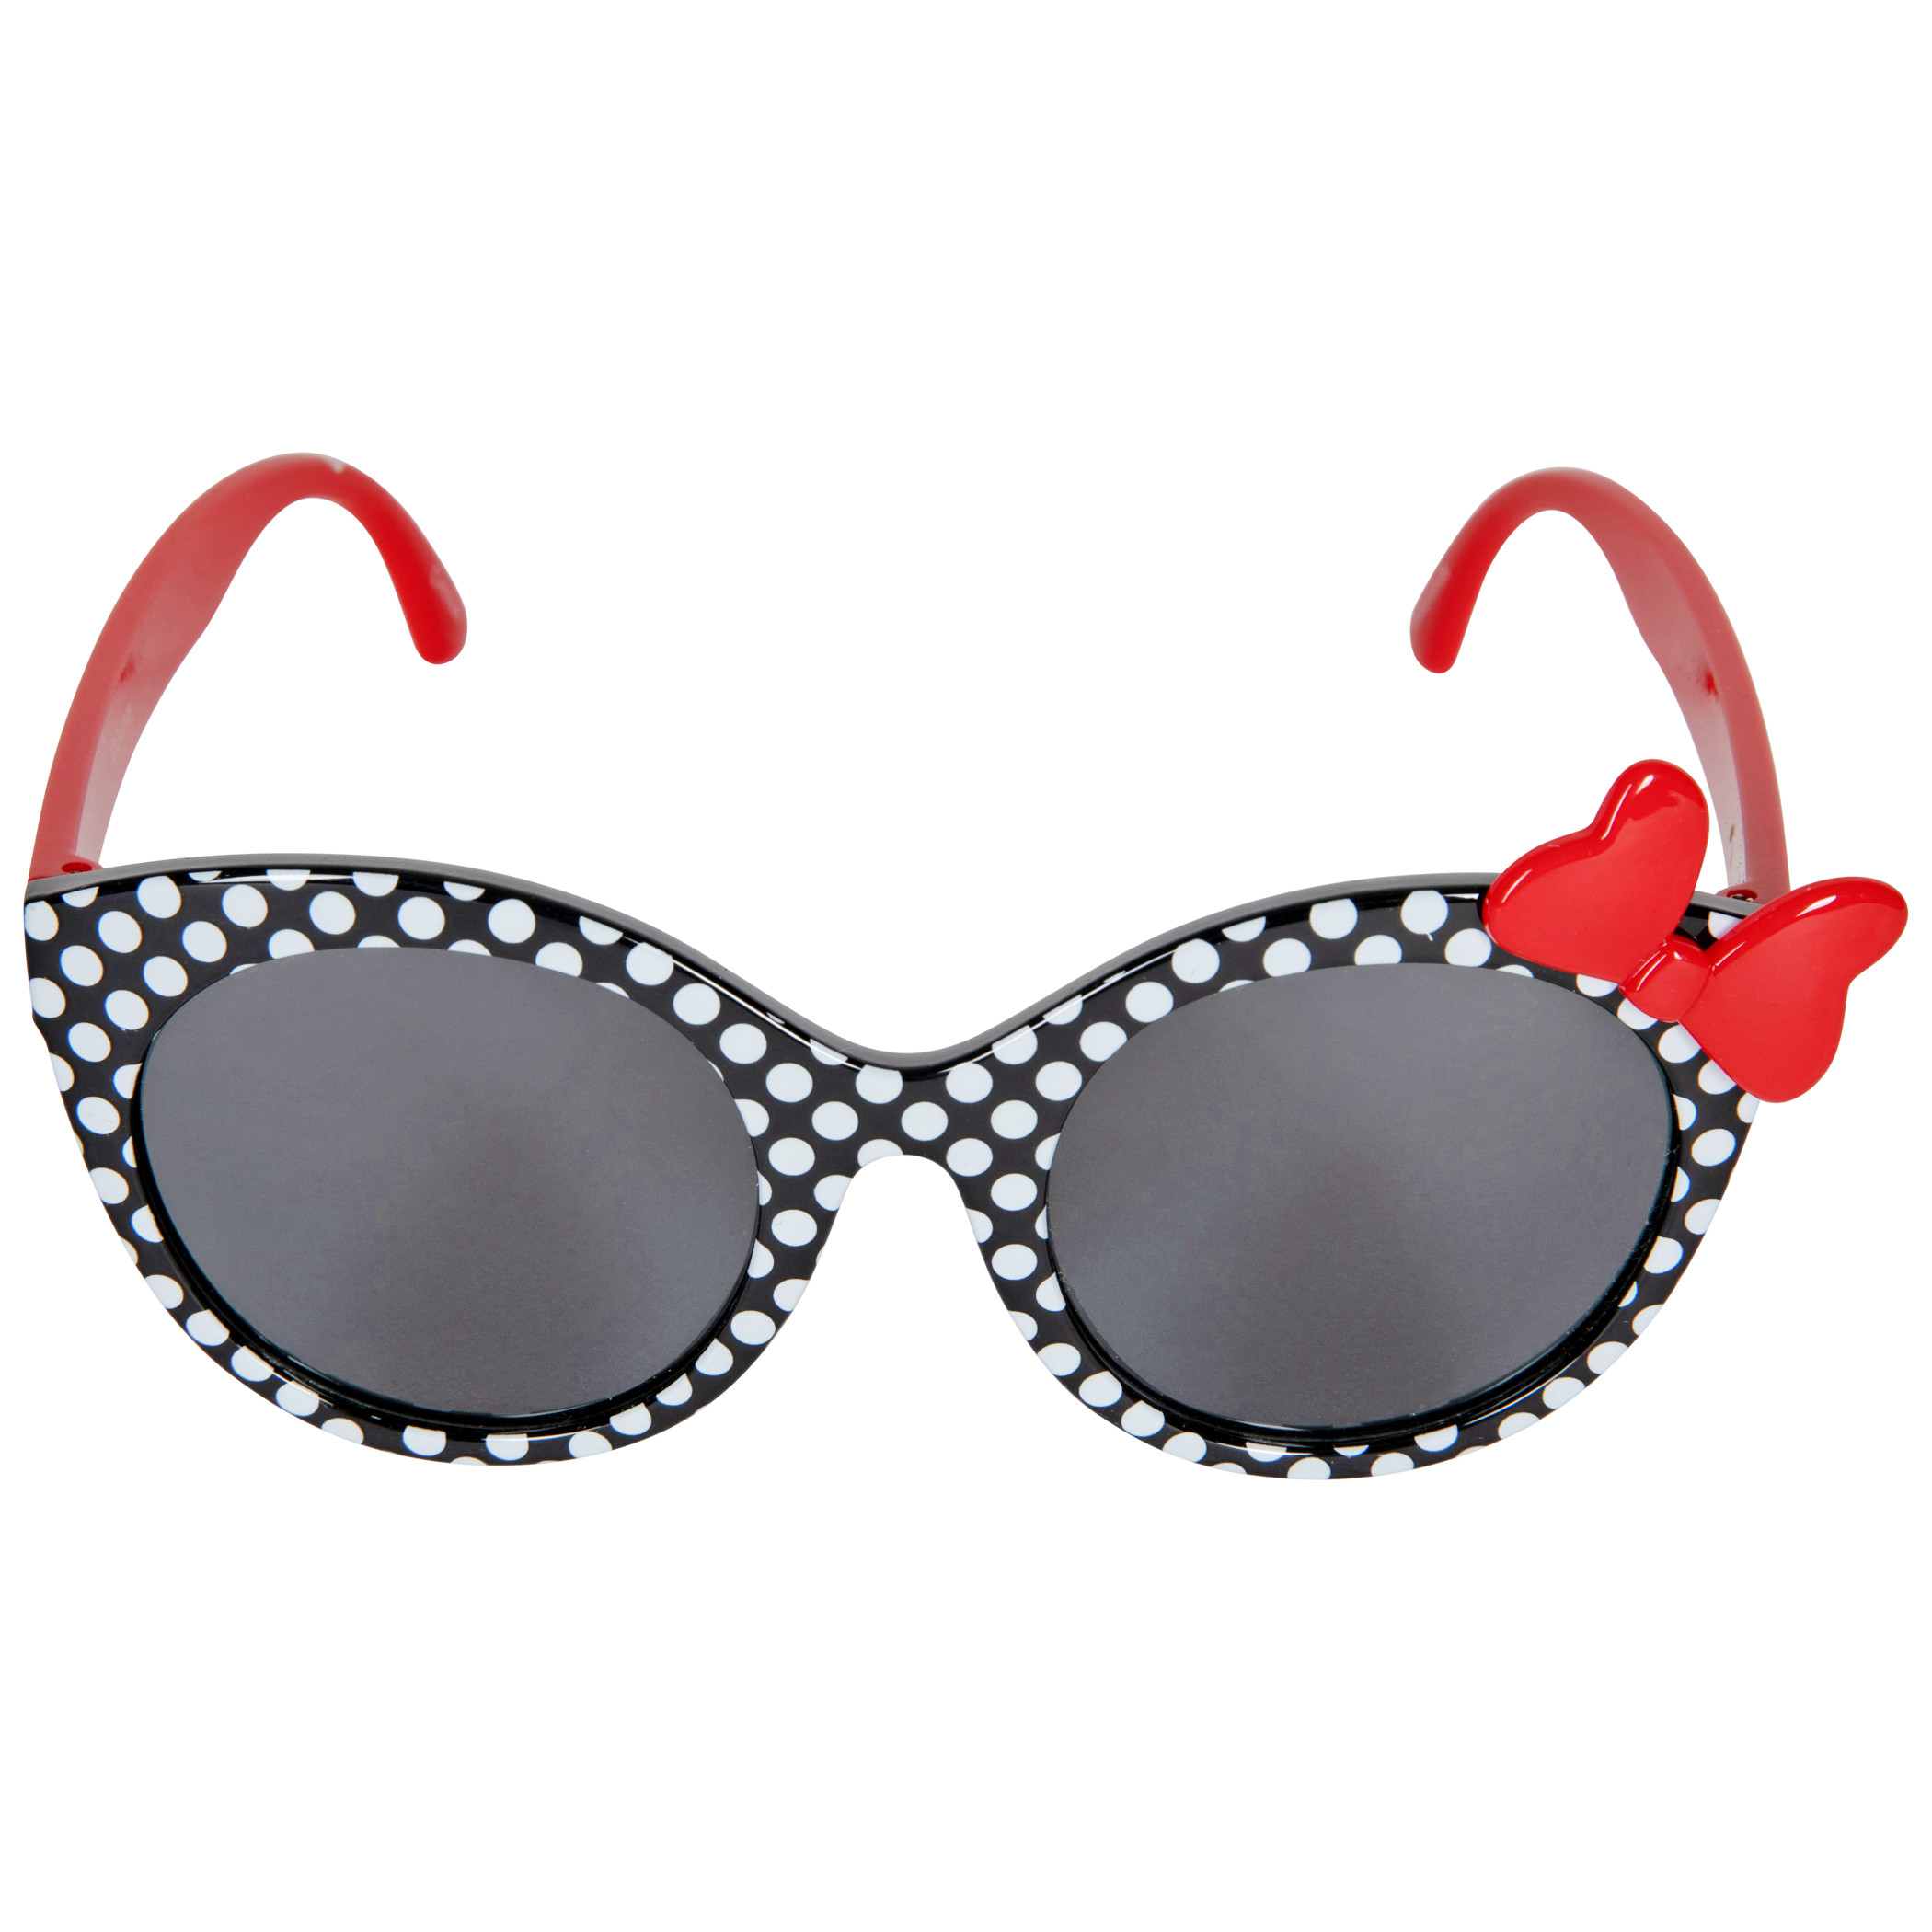 Disney Minnie Mouse Dark Polka Dot Print Adult Sunglasses with Bow